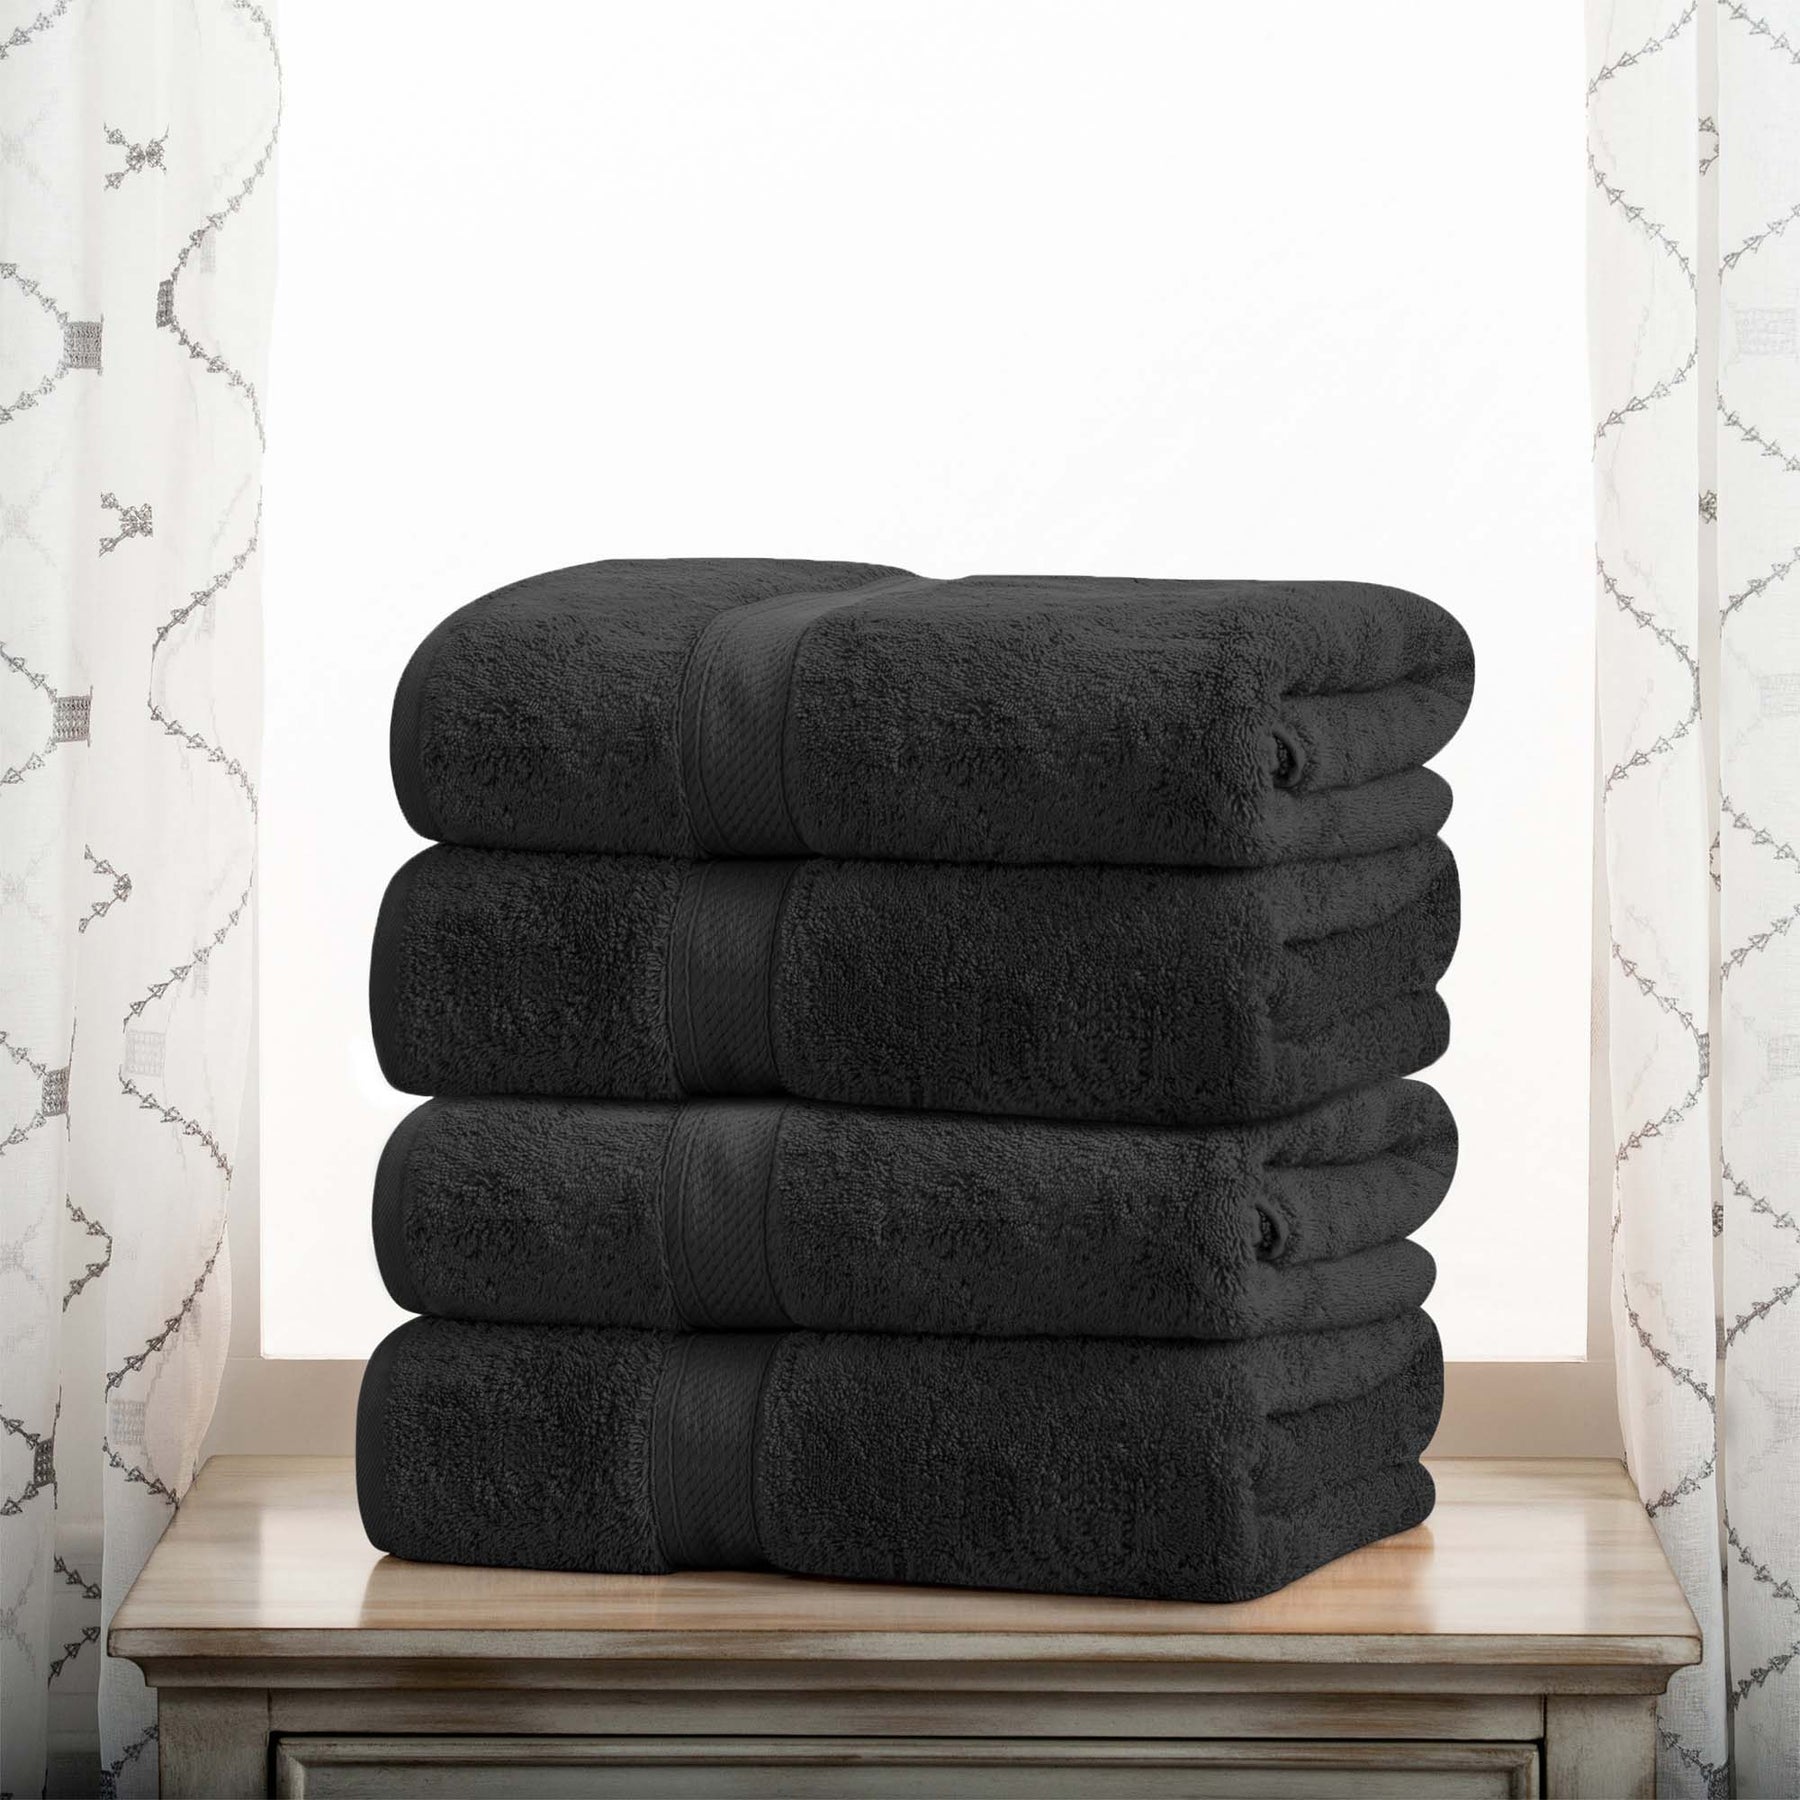 Superior Egyptian Cotton Plush Heavyweight Absorbent Luxury Soft Bath Towel - Black